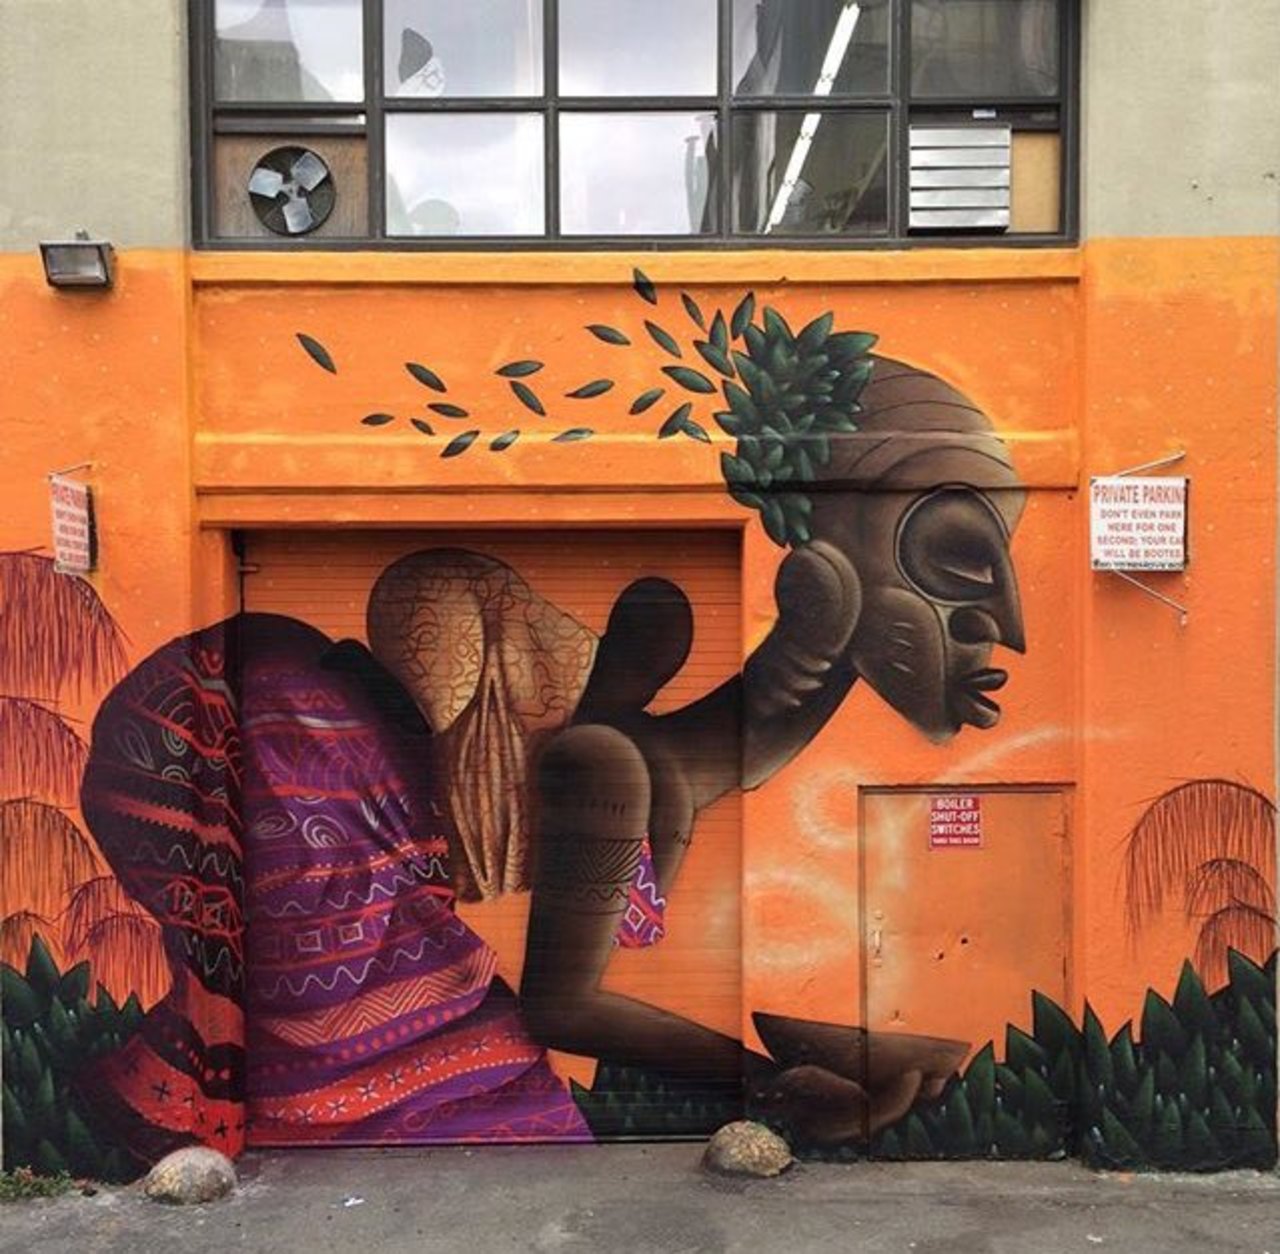 New Street Art by Alexandre Keto in NYC 

#art #graffiti #mural #streetart https://t.co/LKbcZ1Xb74